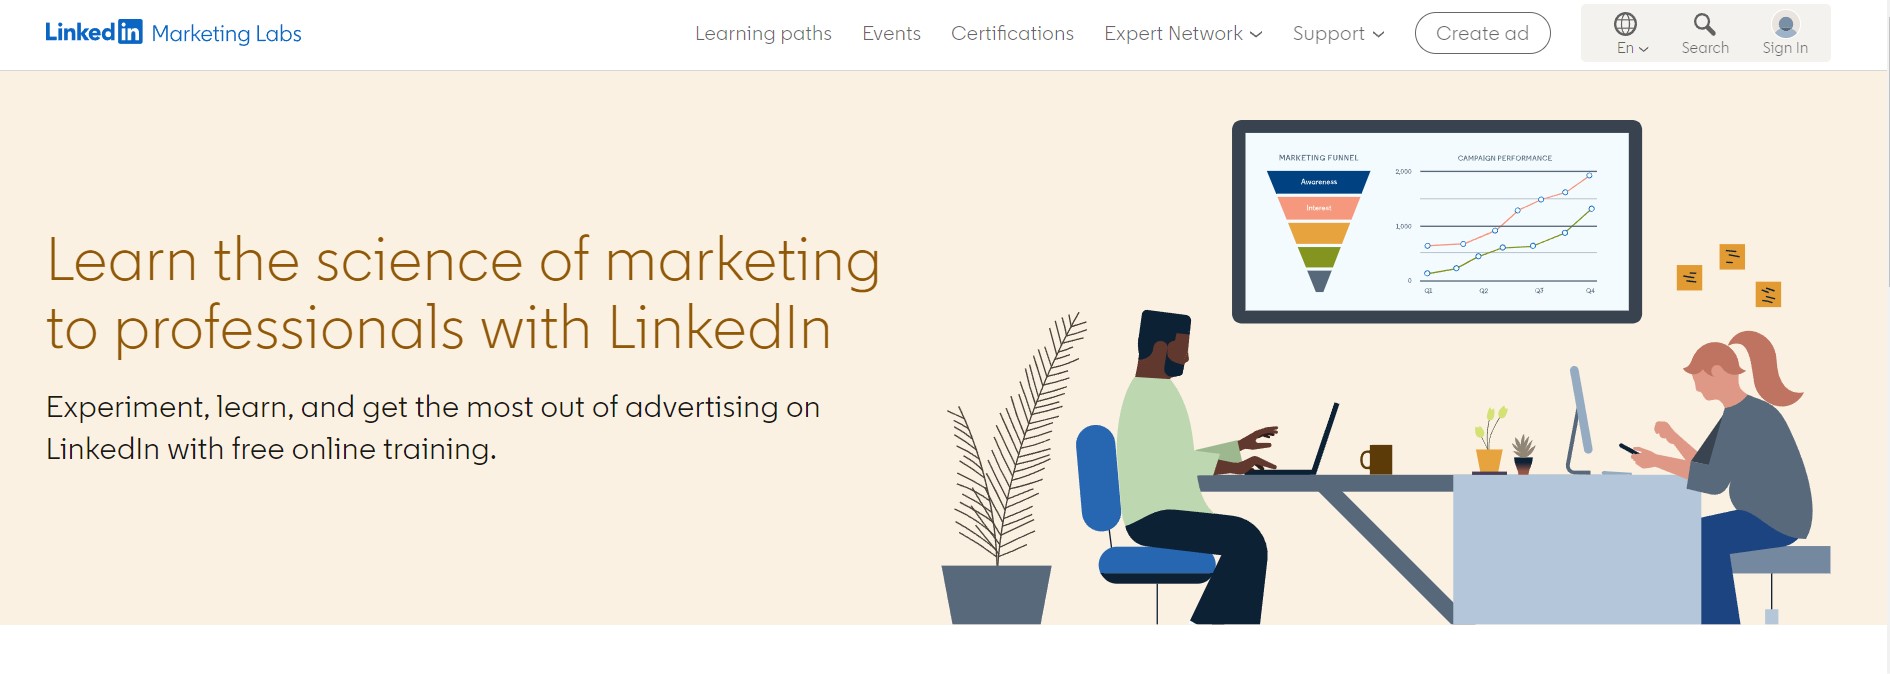 Linkedln Learning Marketing Lab